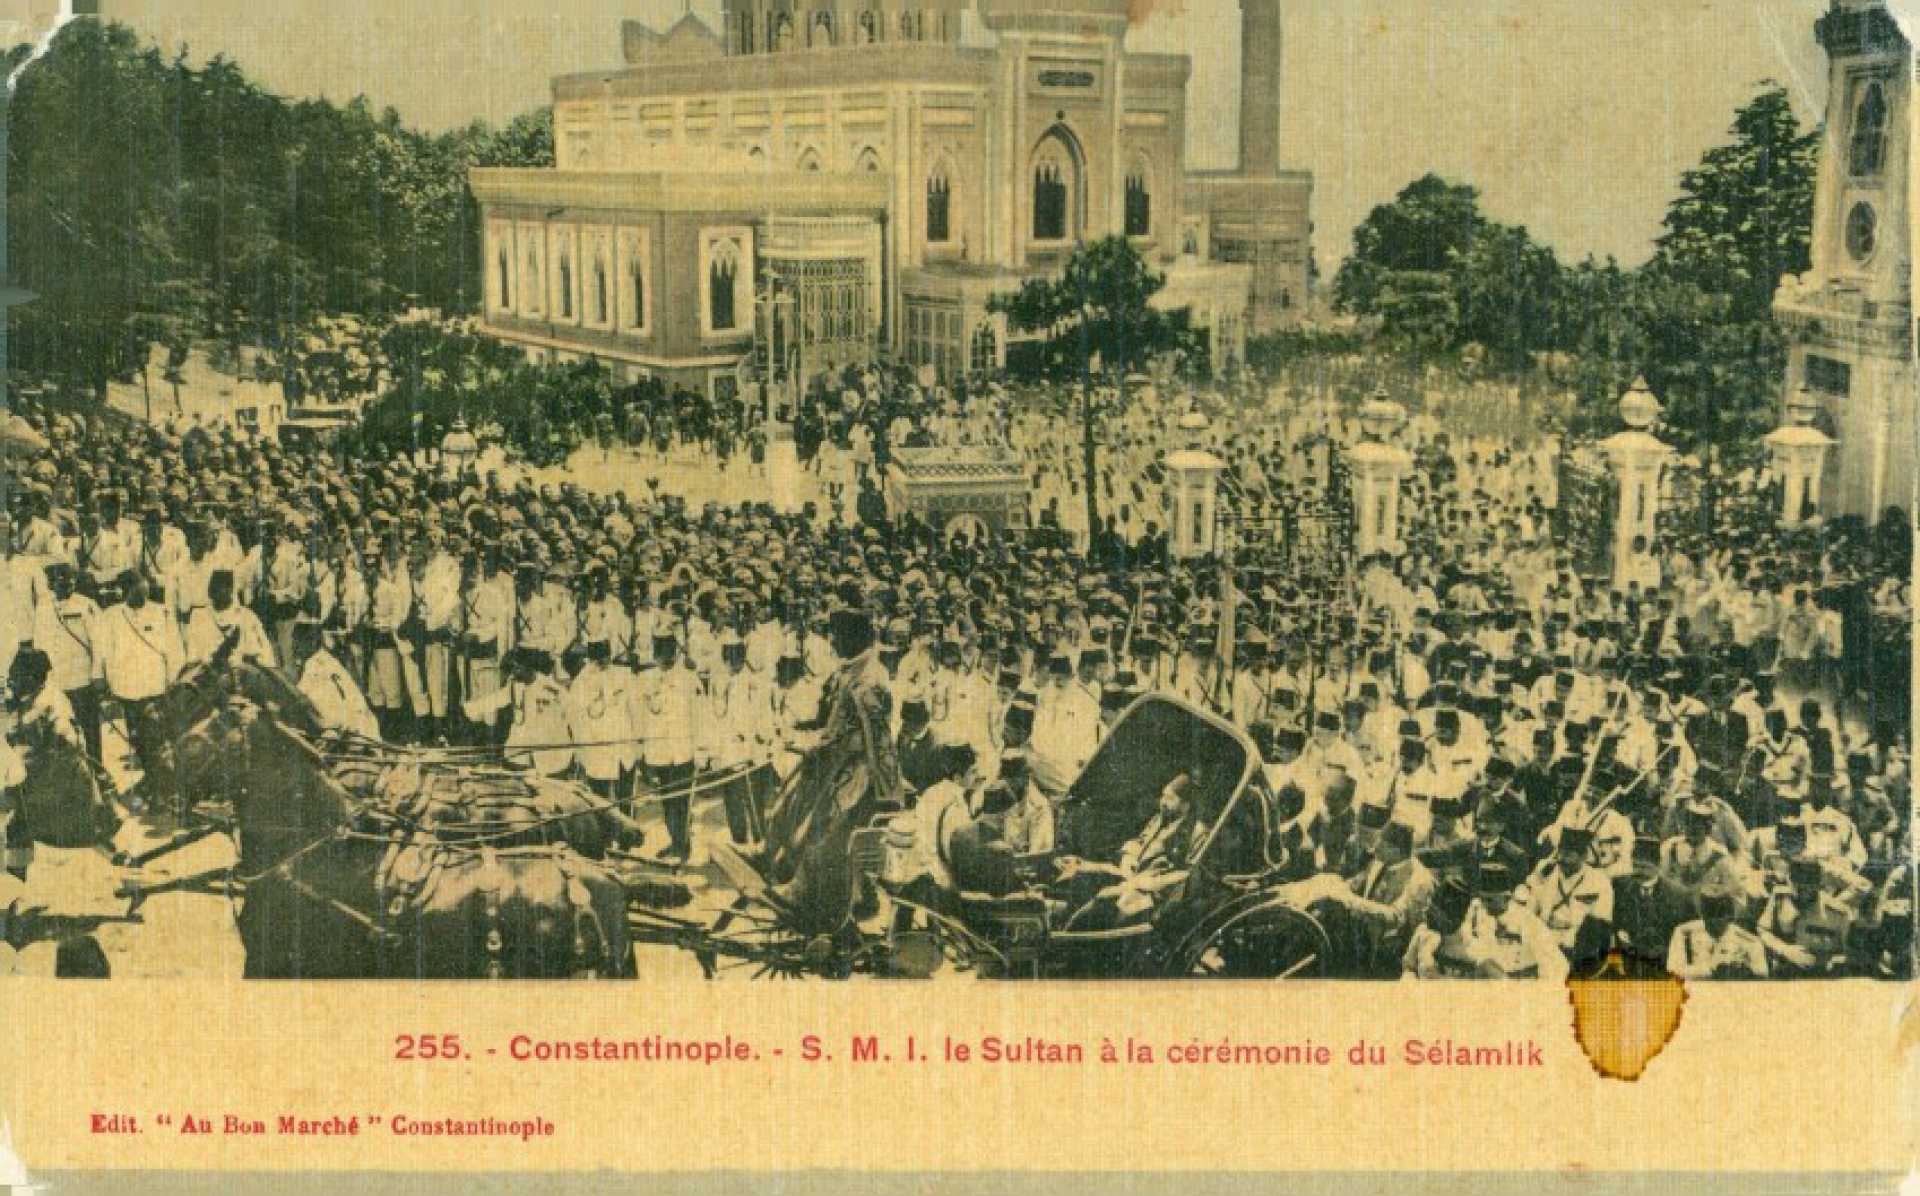 Constantinople. – S. M. I. le Sultan a la ceremonie du Selamlik